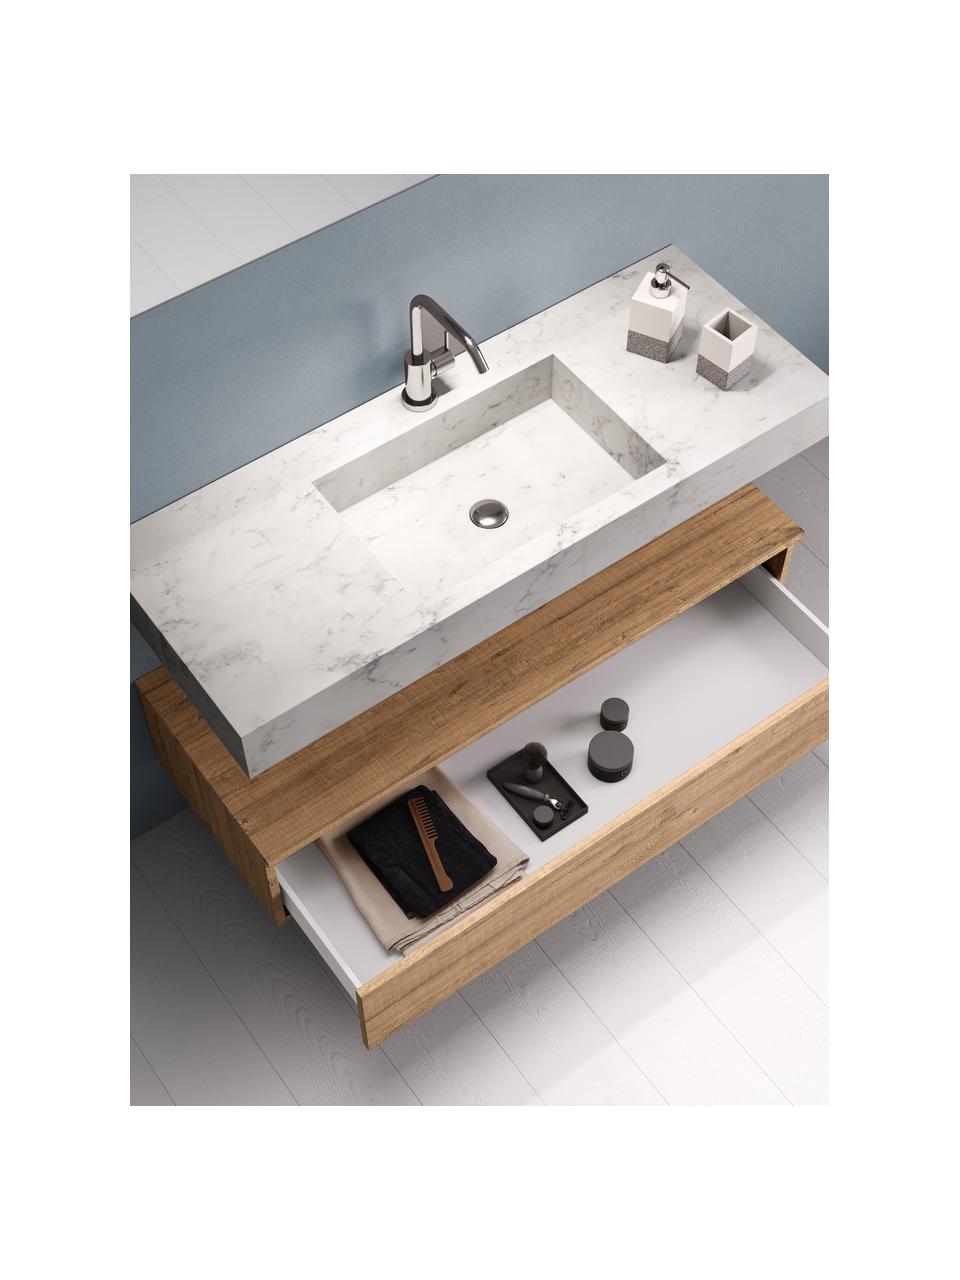 Sada koupelnového vybavení Yoka, 4 díly, Bílá mramorovaná, vzhled dubového dřeva, Sada s různými velikostmi